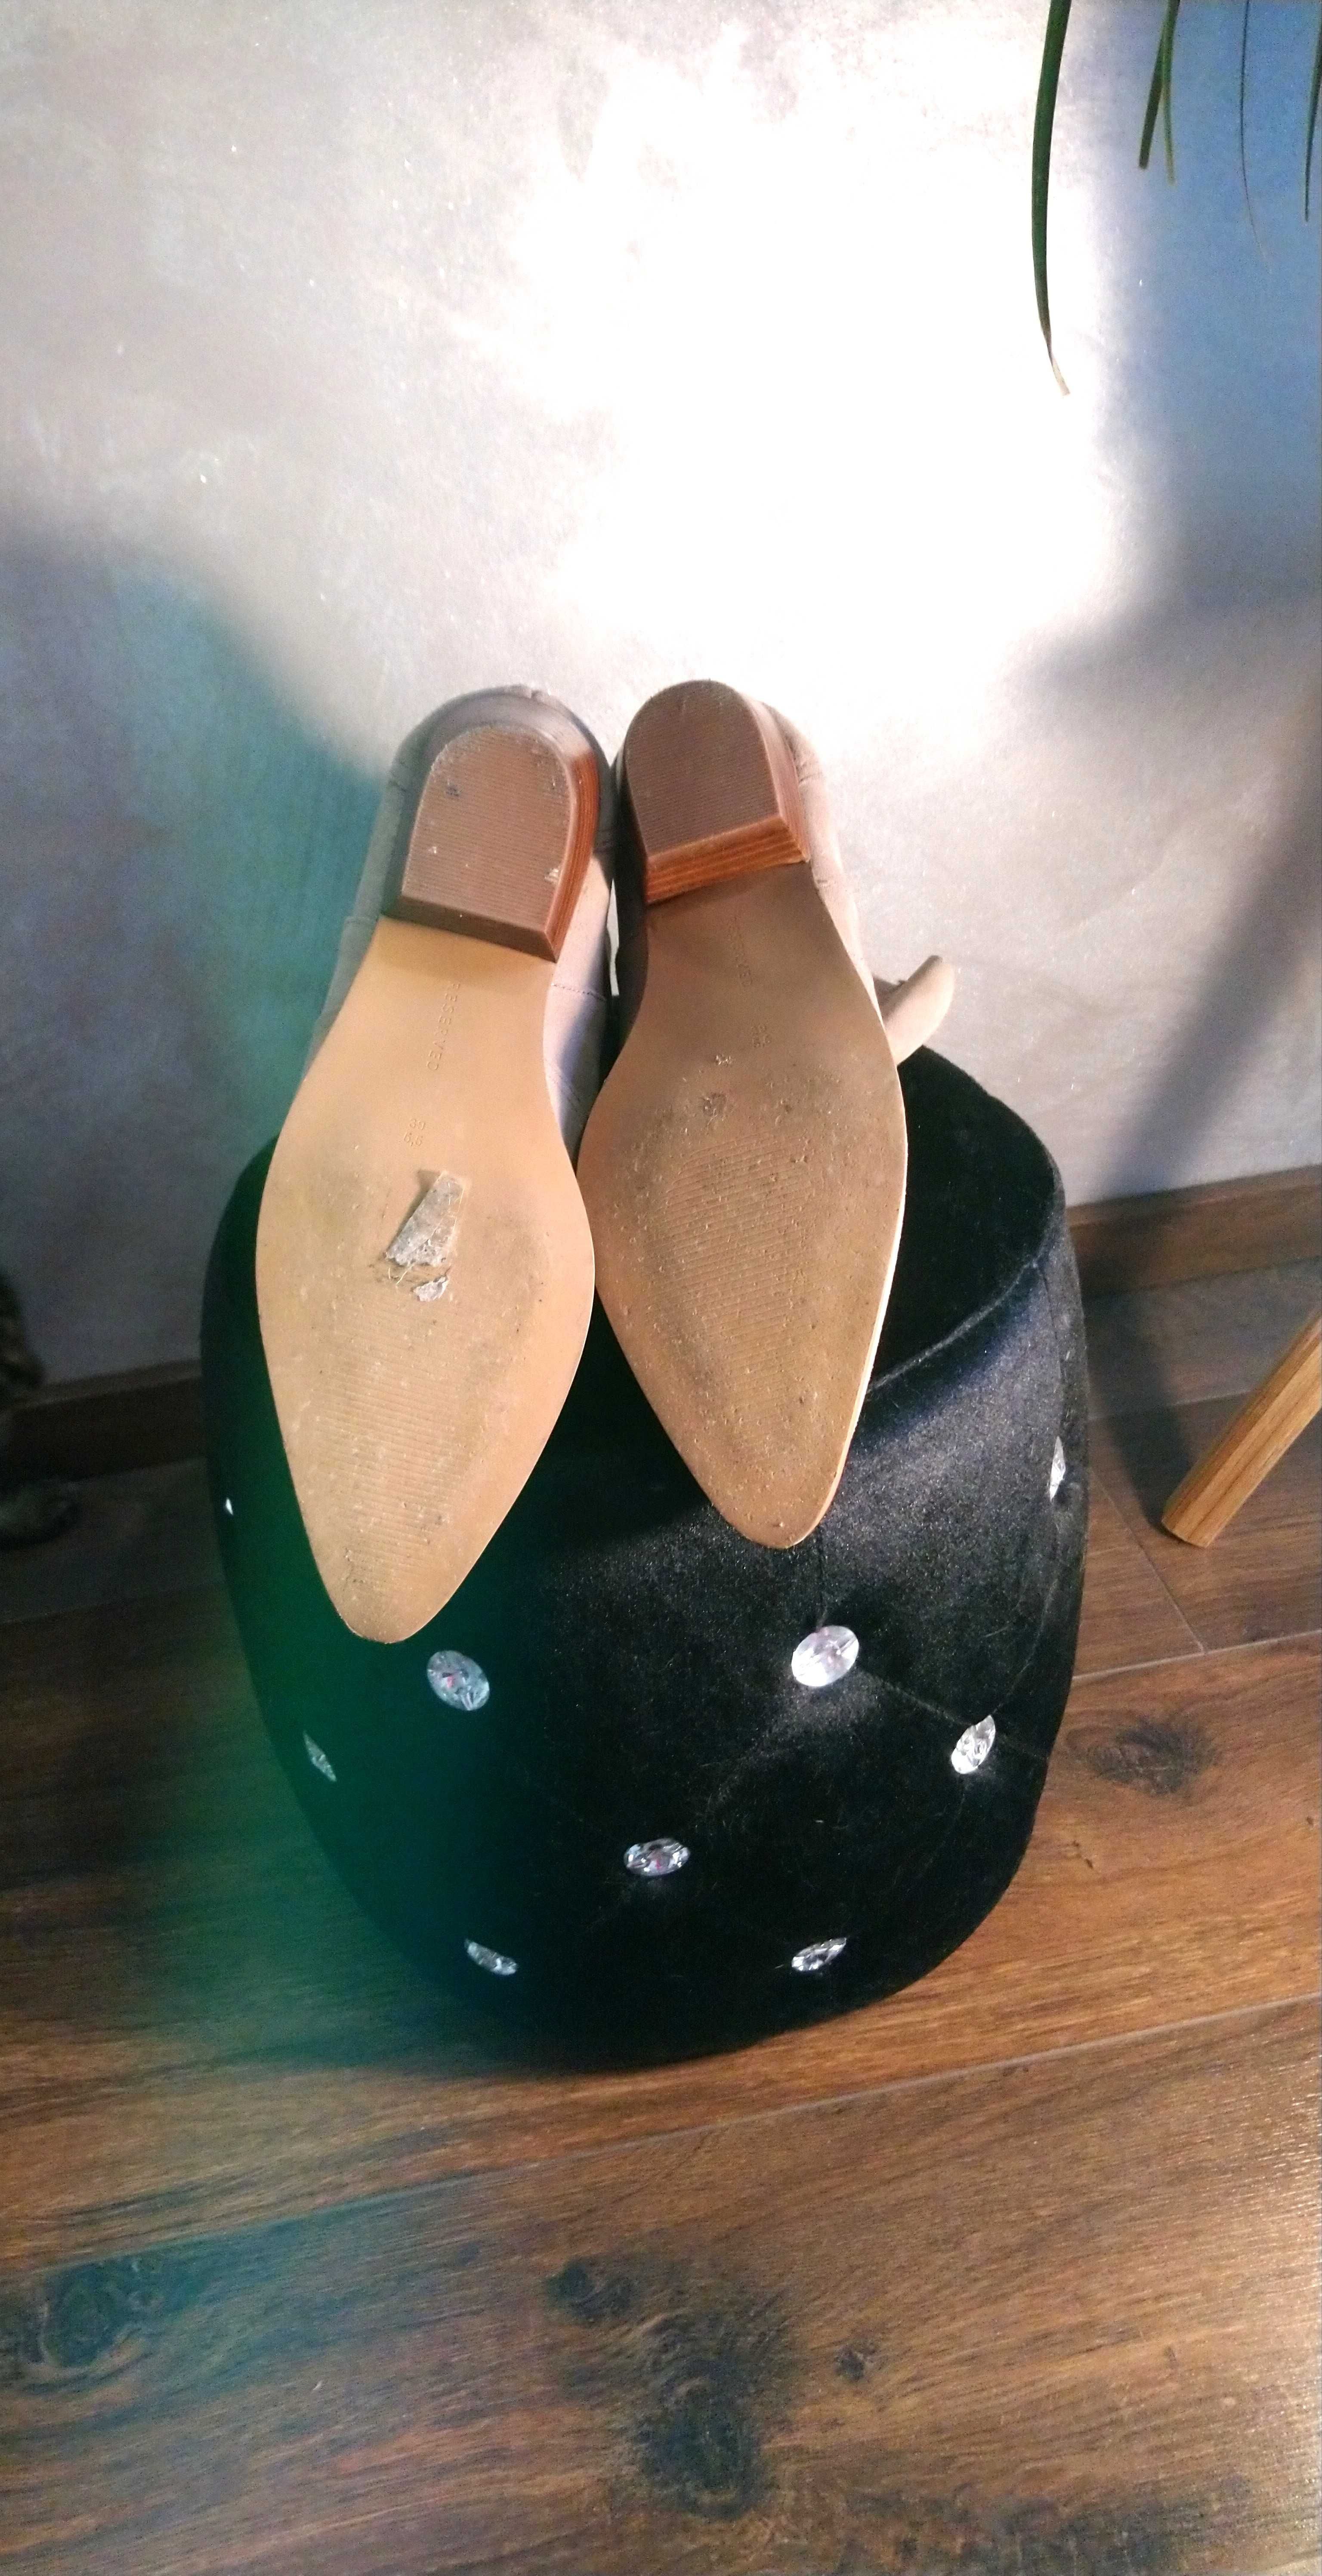 Skórzane buty botki damskie skóra reserved beżowe R. 39 5,5